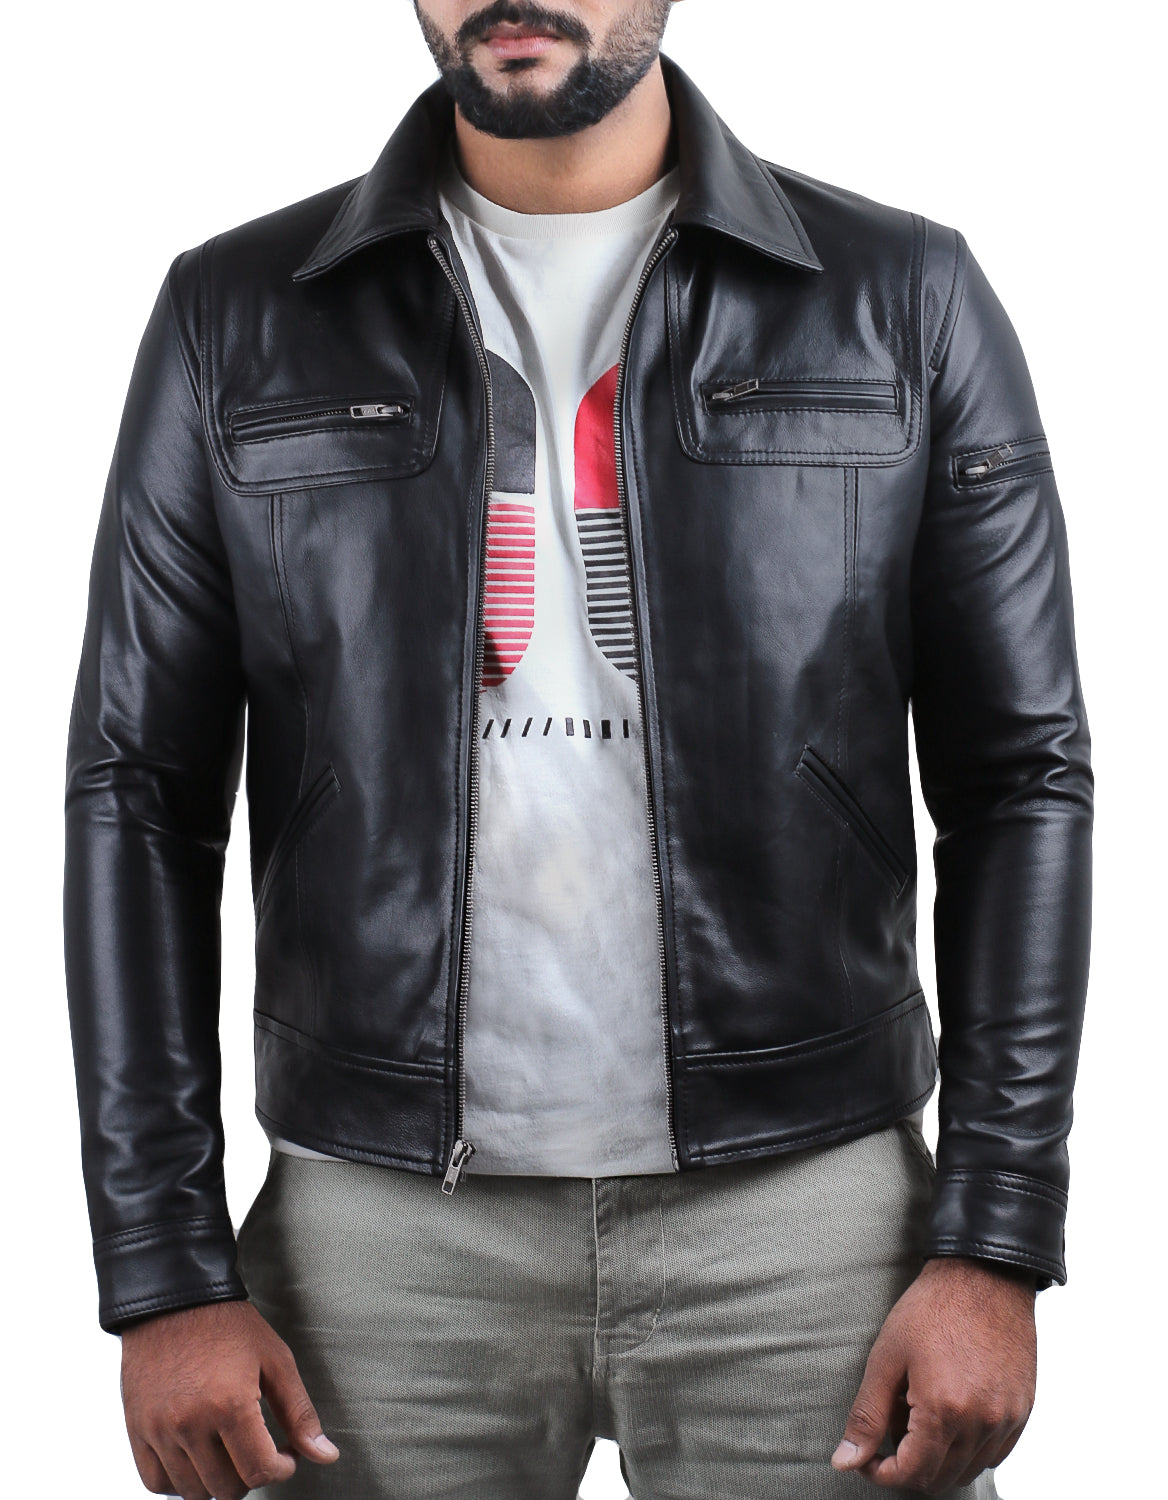 Black@orbitix-black-aviator-leather-jacket